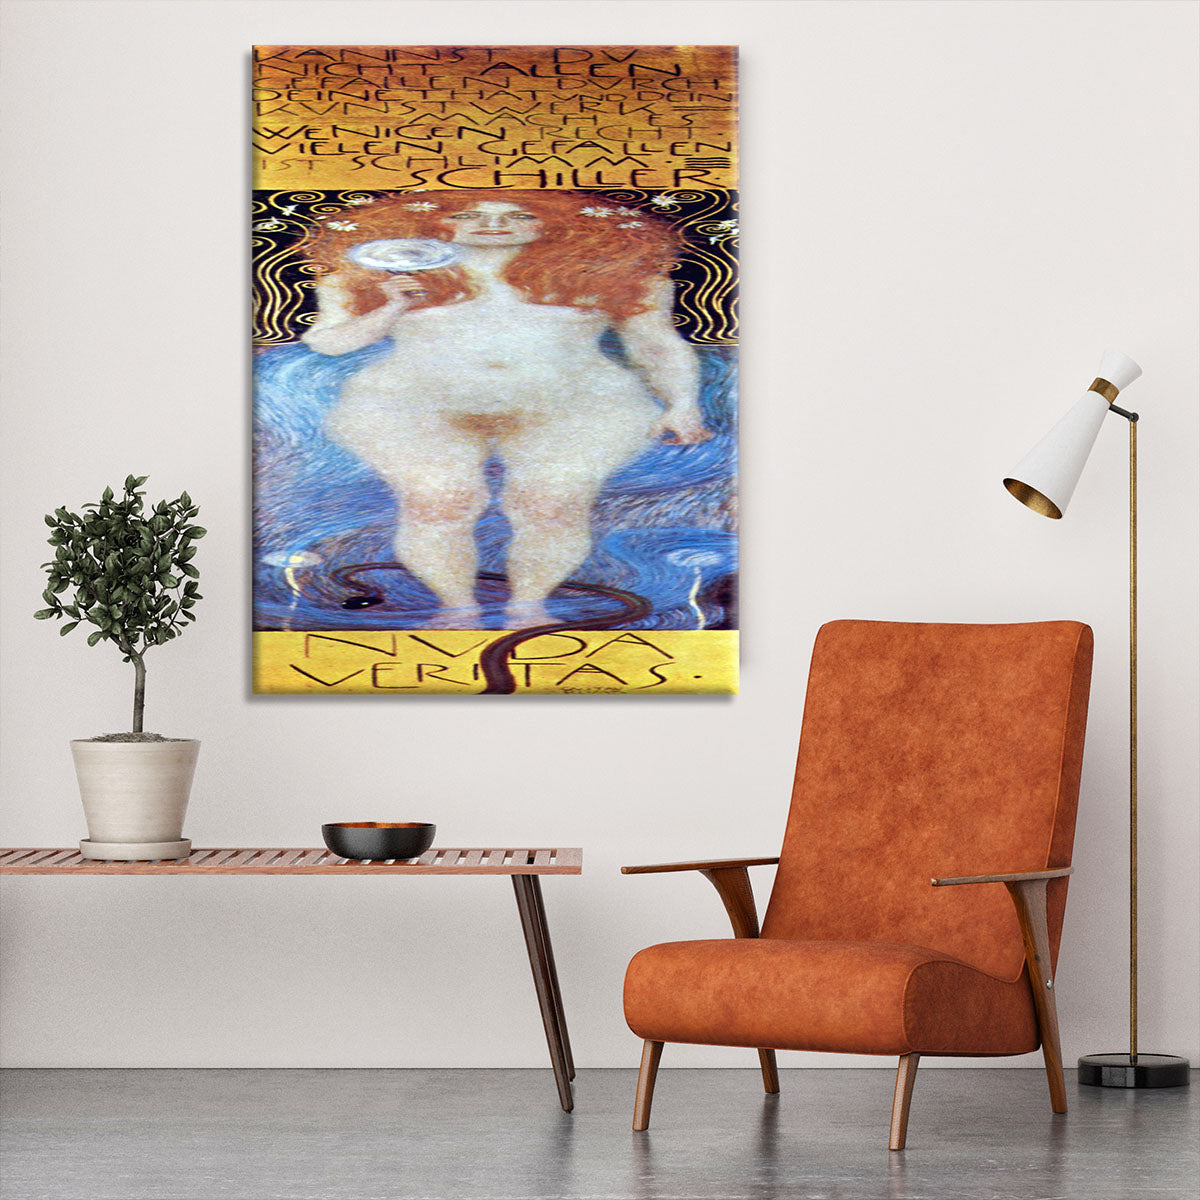 Nuda Veritas Naked Truth by Klimt Canvas Print or Poster - Canvas Art Rocks - 6